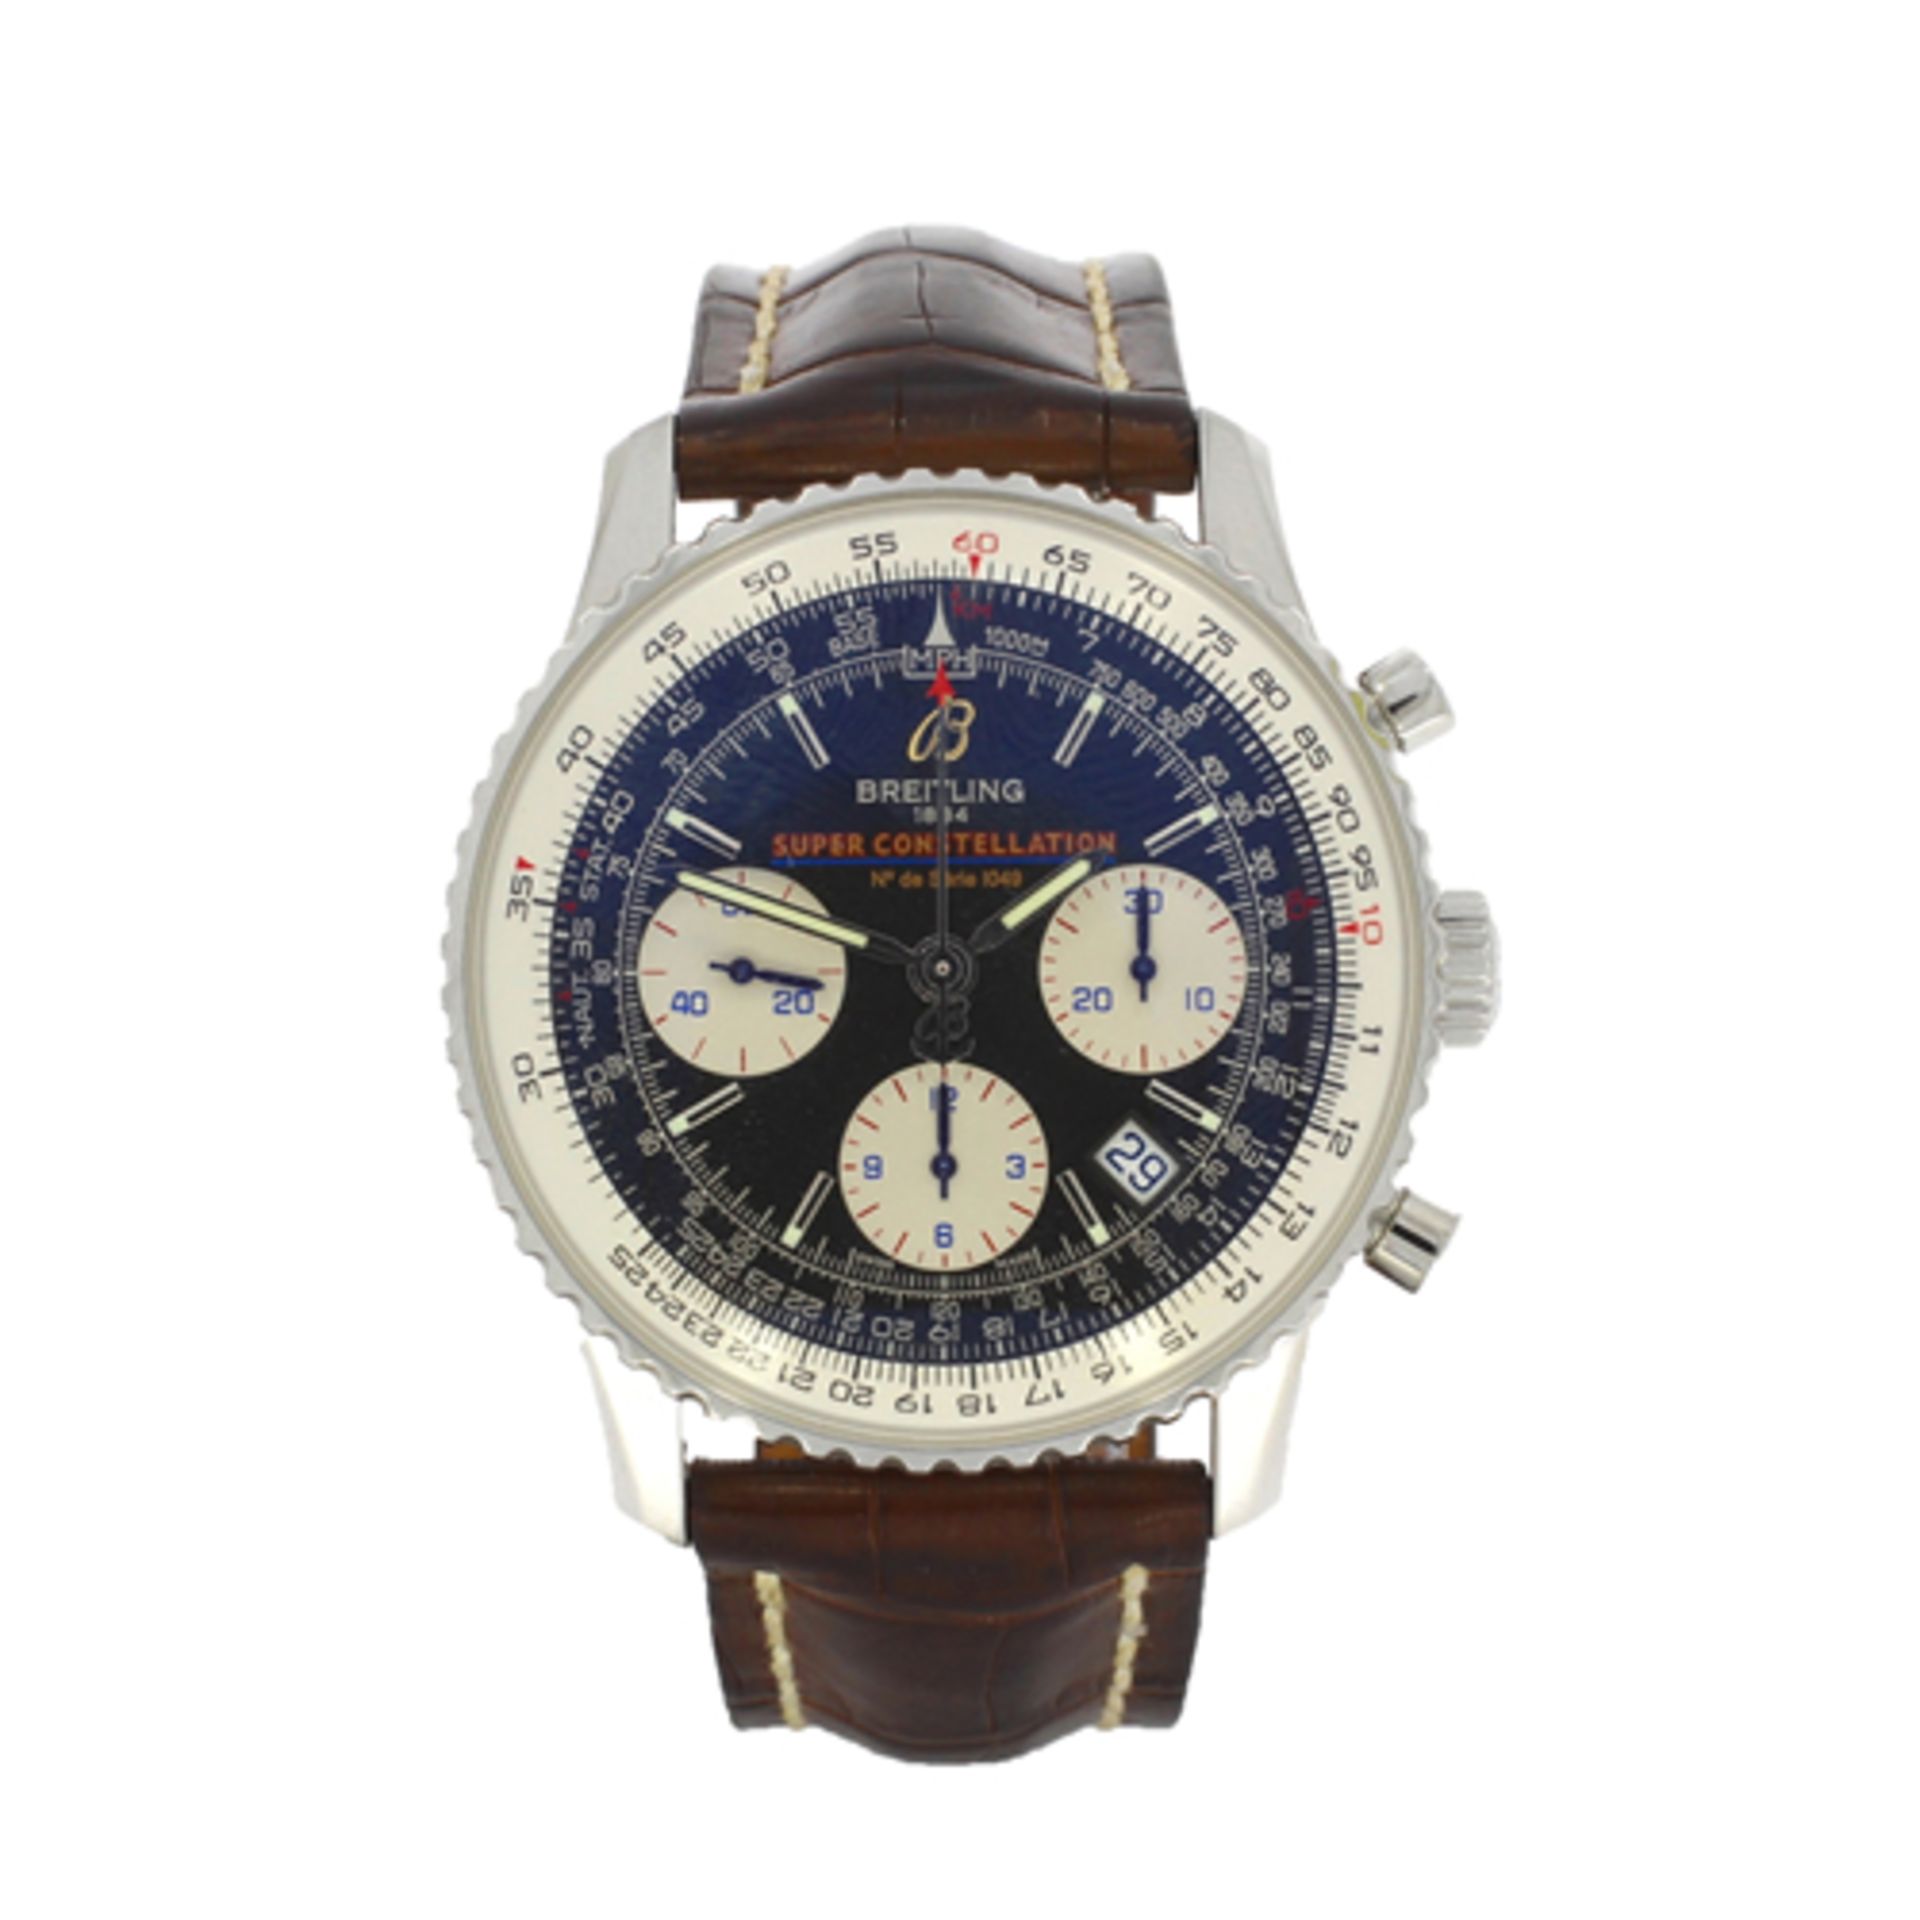 Brietling Navitimer Super Constellation Ltd Ed Automatic Stainless Steel Gentleman's Wristwatch